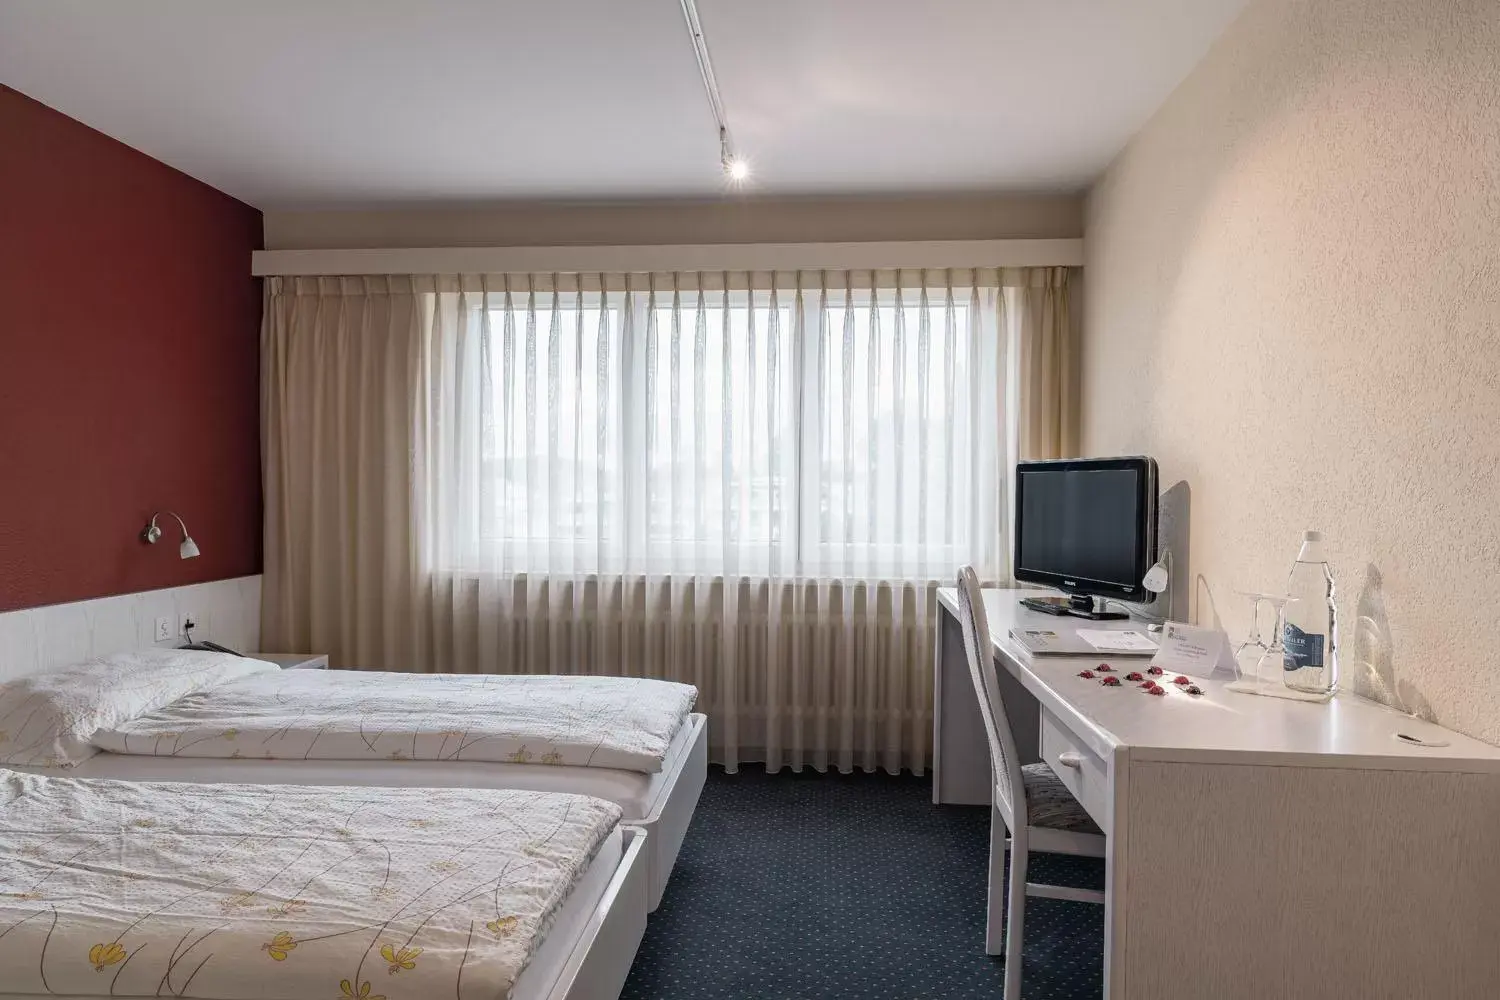 Bed, Room Photo in Hotel Drei Könige